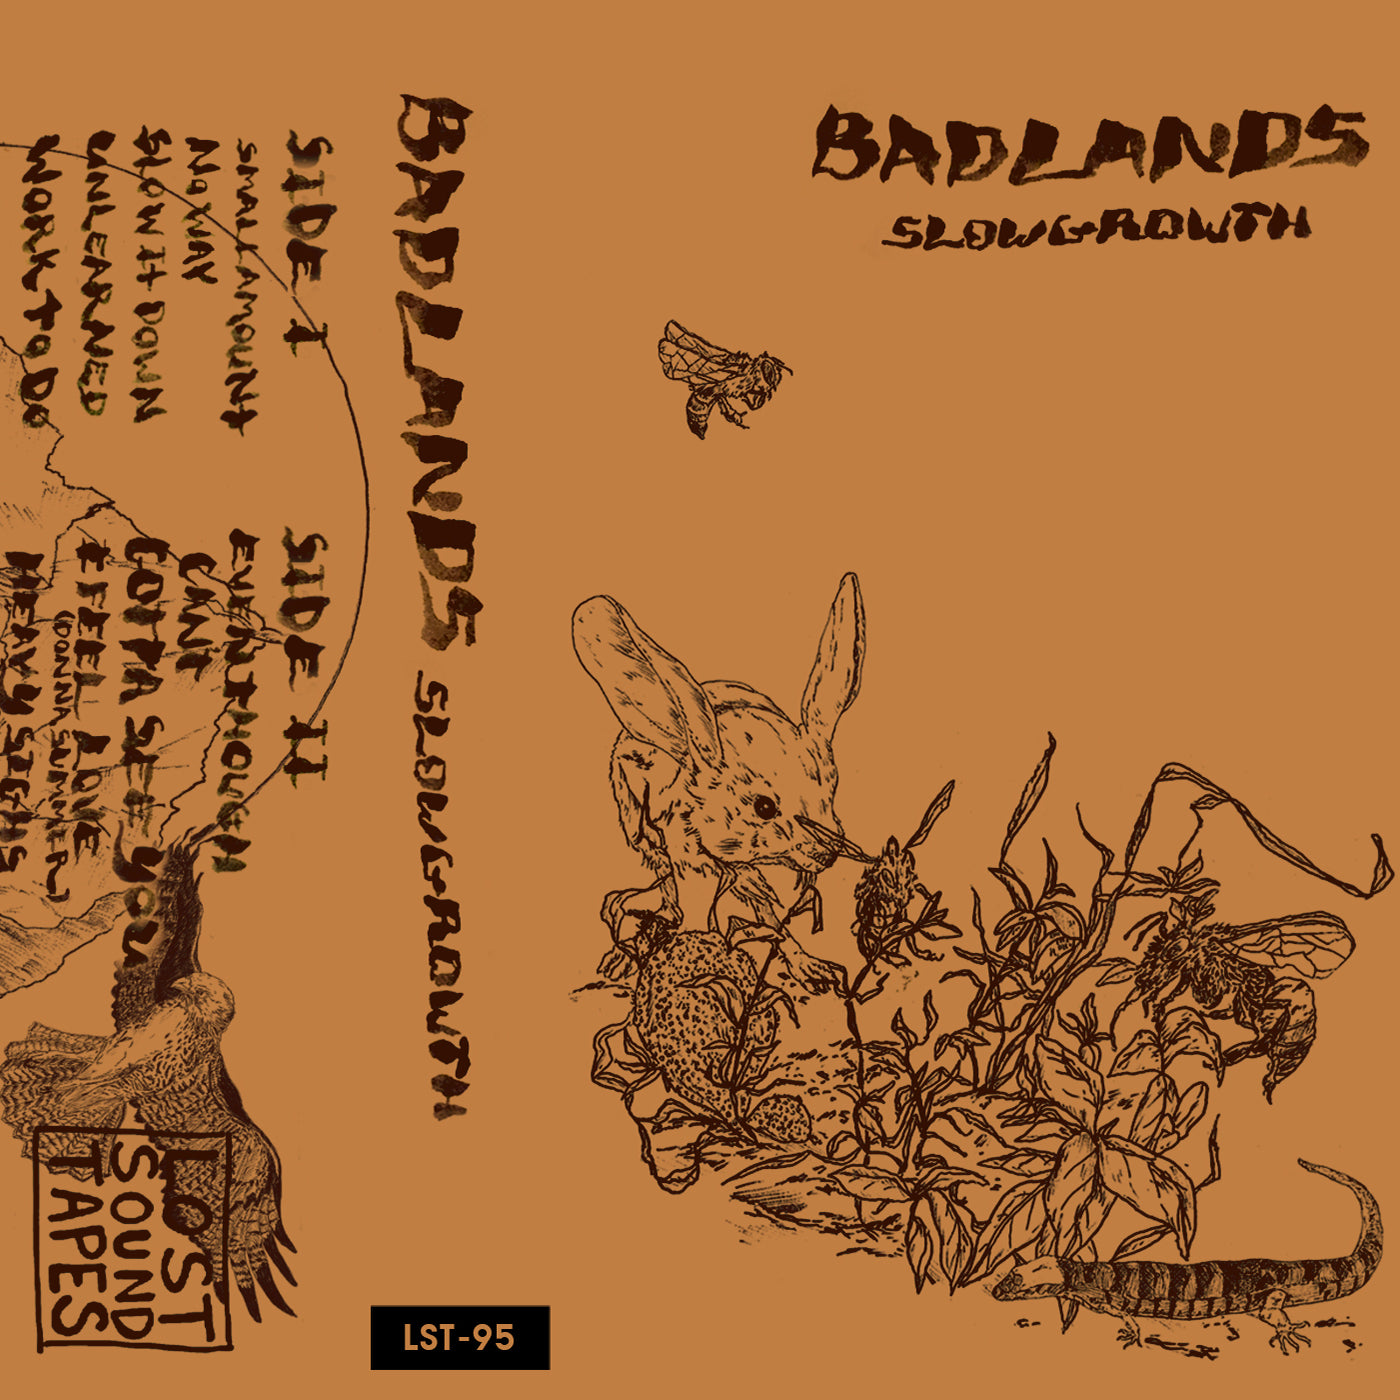 BADLANDS "Slow Growth" cassette tape